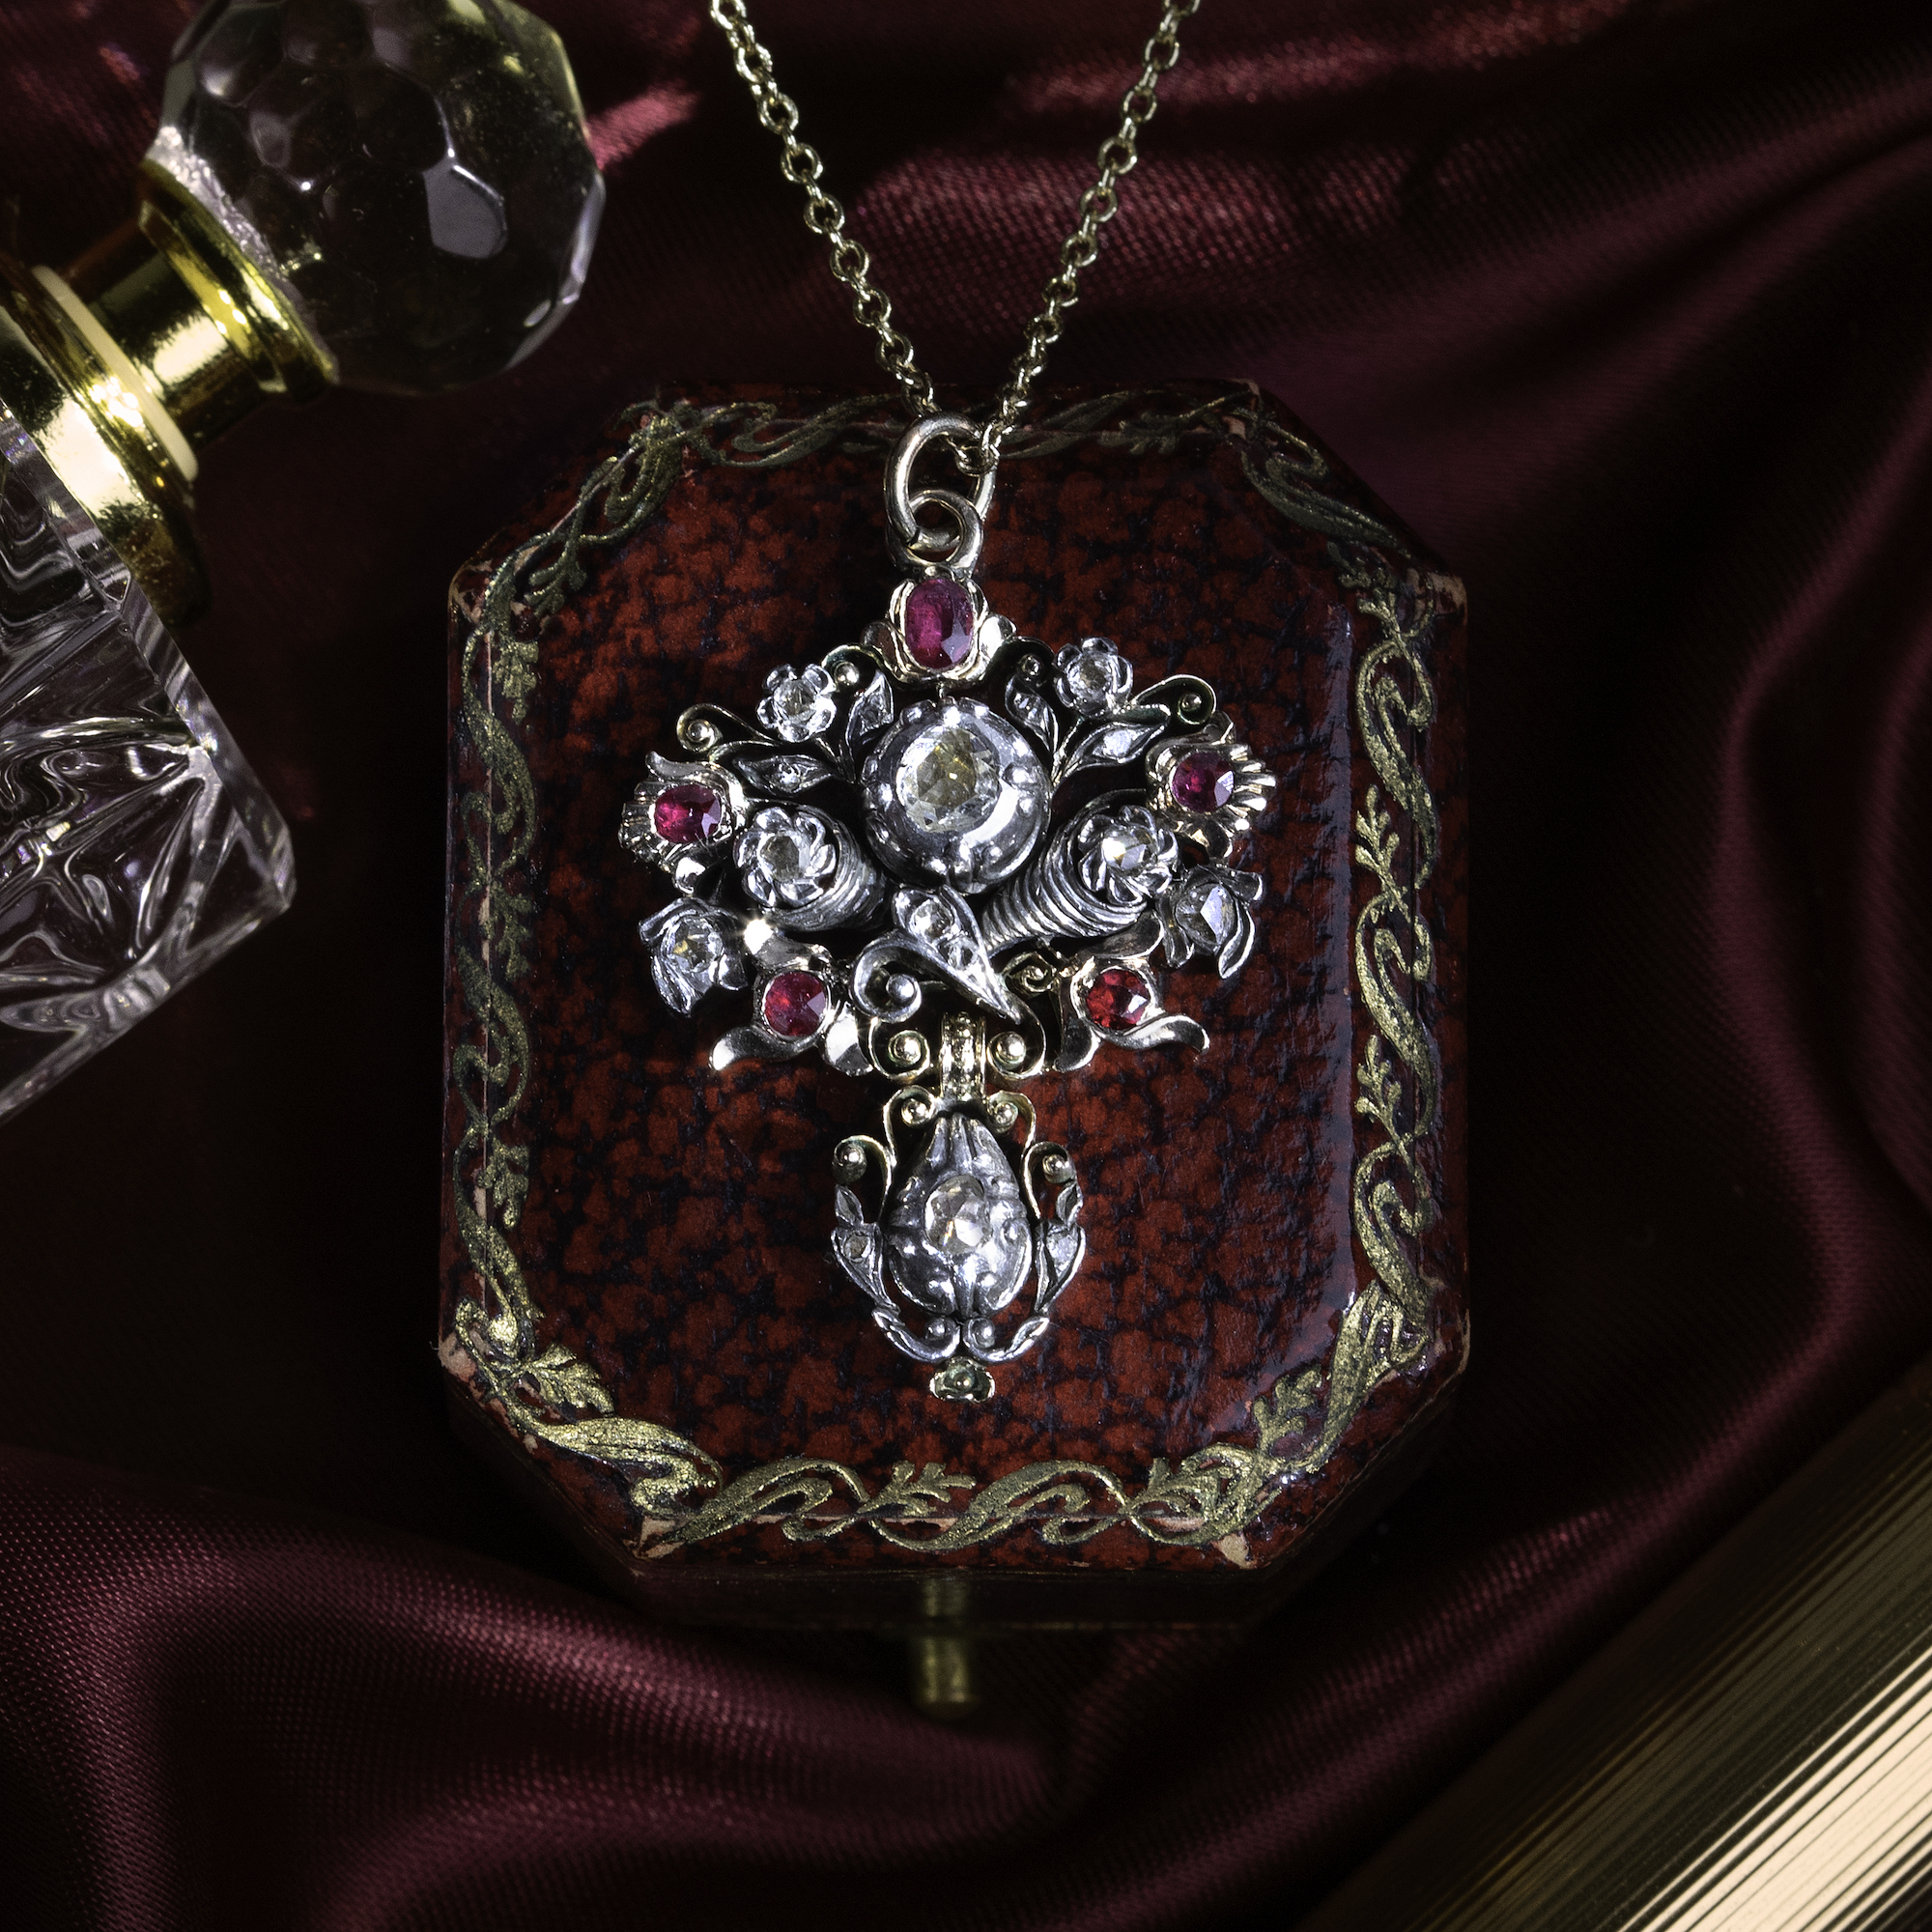 Antique Georgian Revival Pendant with Rubies & Diamonds, c. 1890